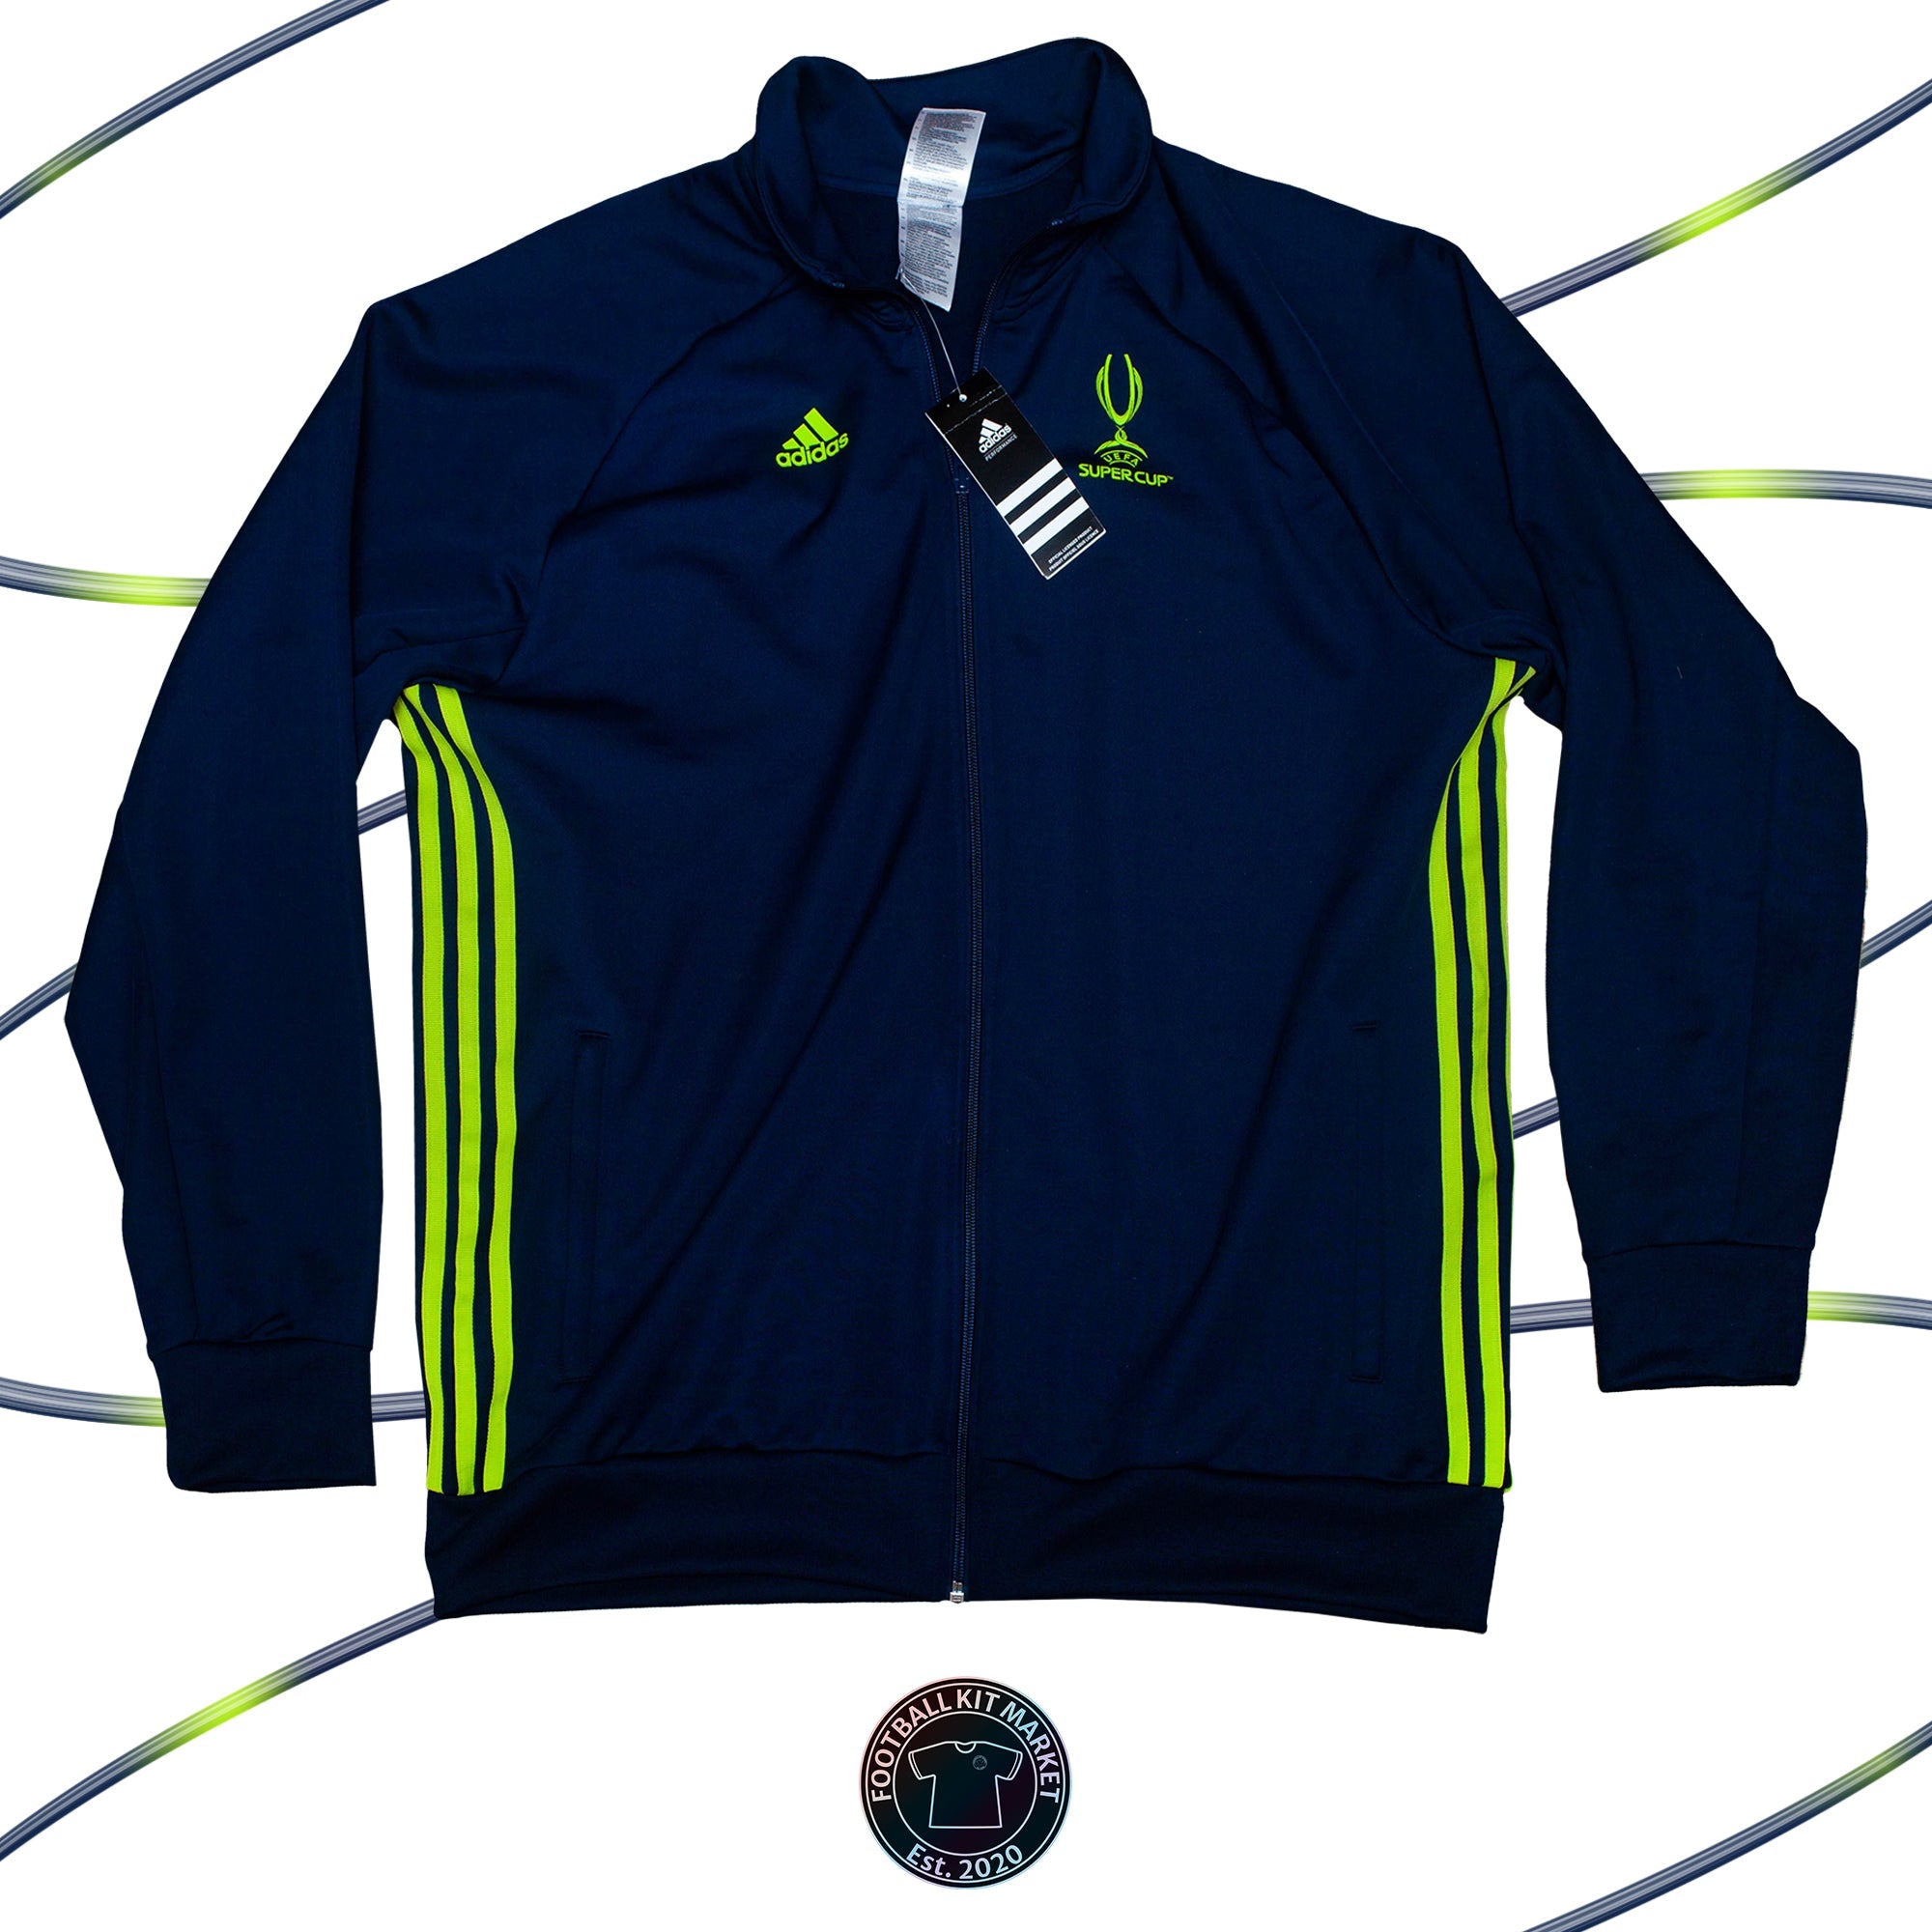 Genuine UEFA SUPERCUP TRONDHEIM Jacket (2016) - ADIDAS (XL) - Product Image from Football Kit Market